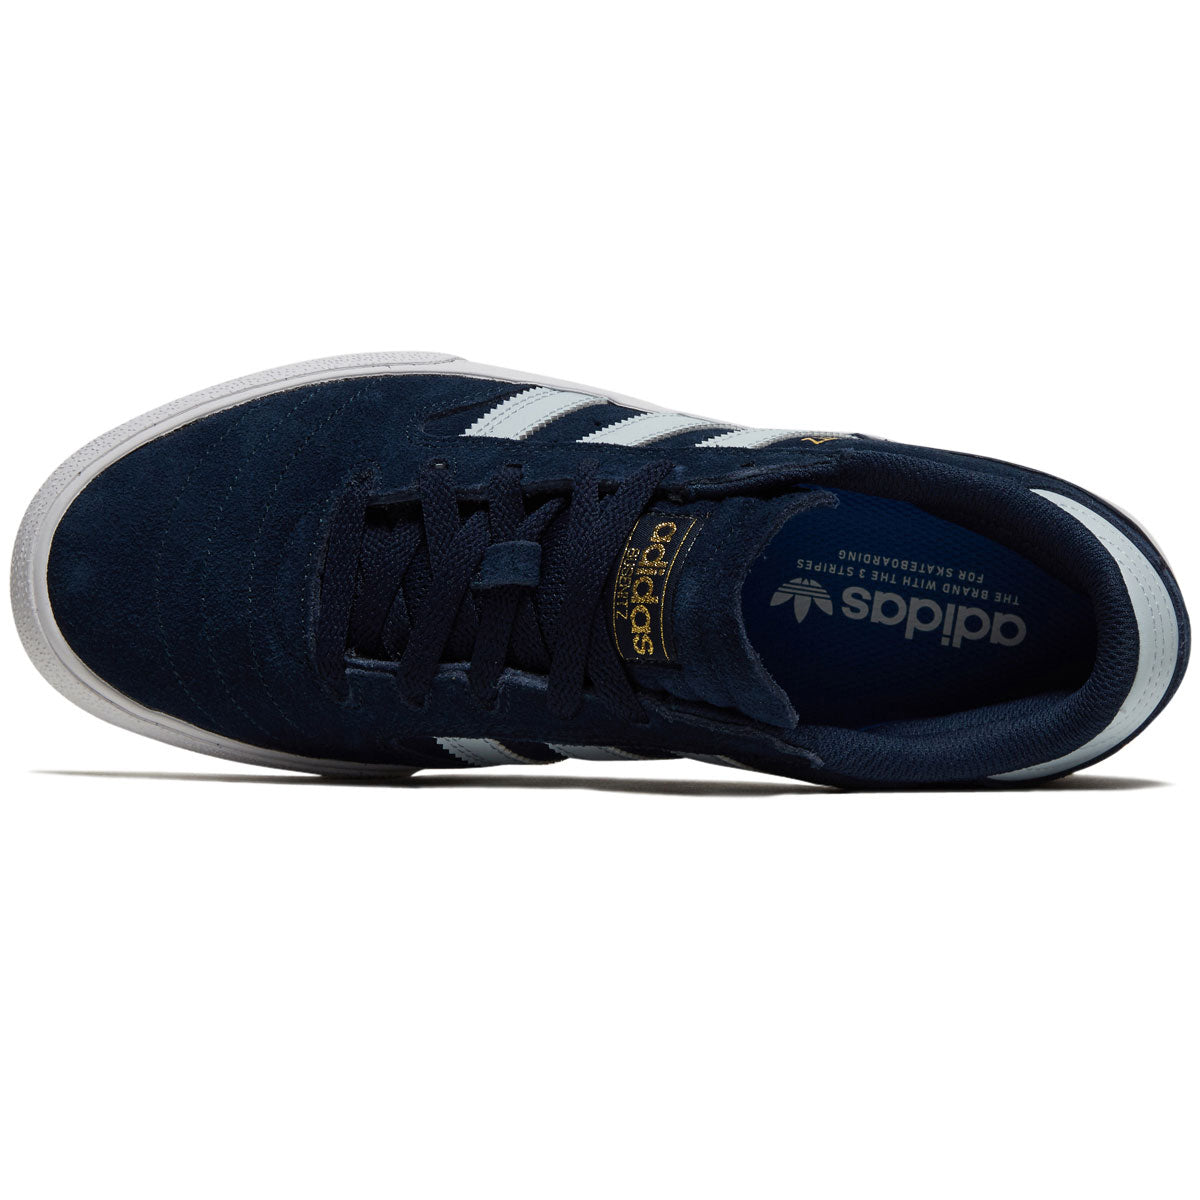 Adidas Busenitz Vulc II Shoes - Collegiate Navy/Halo Blue/Gold Foi image 3